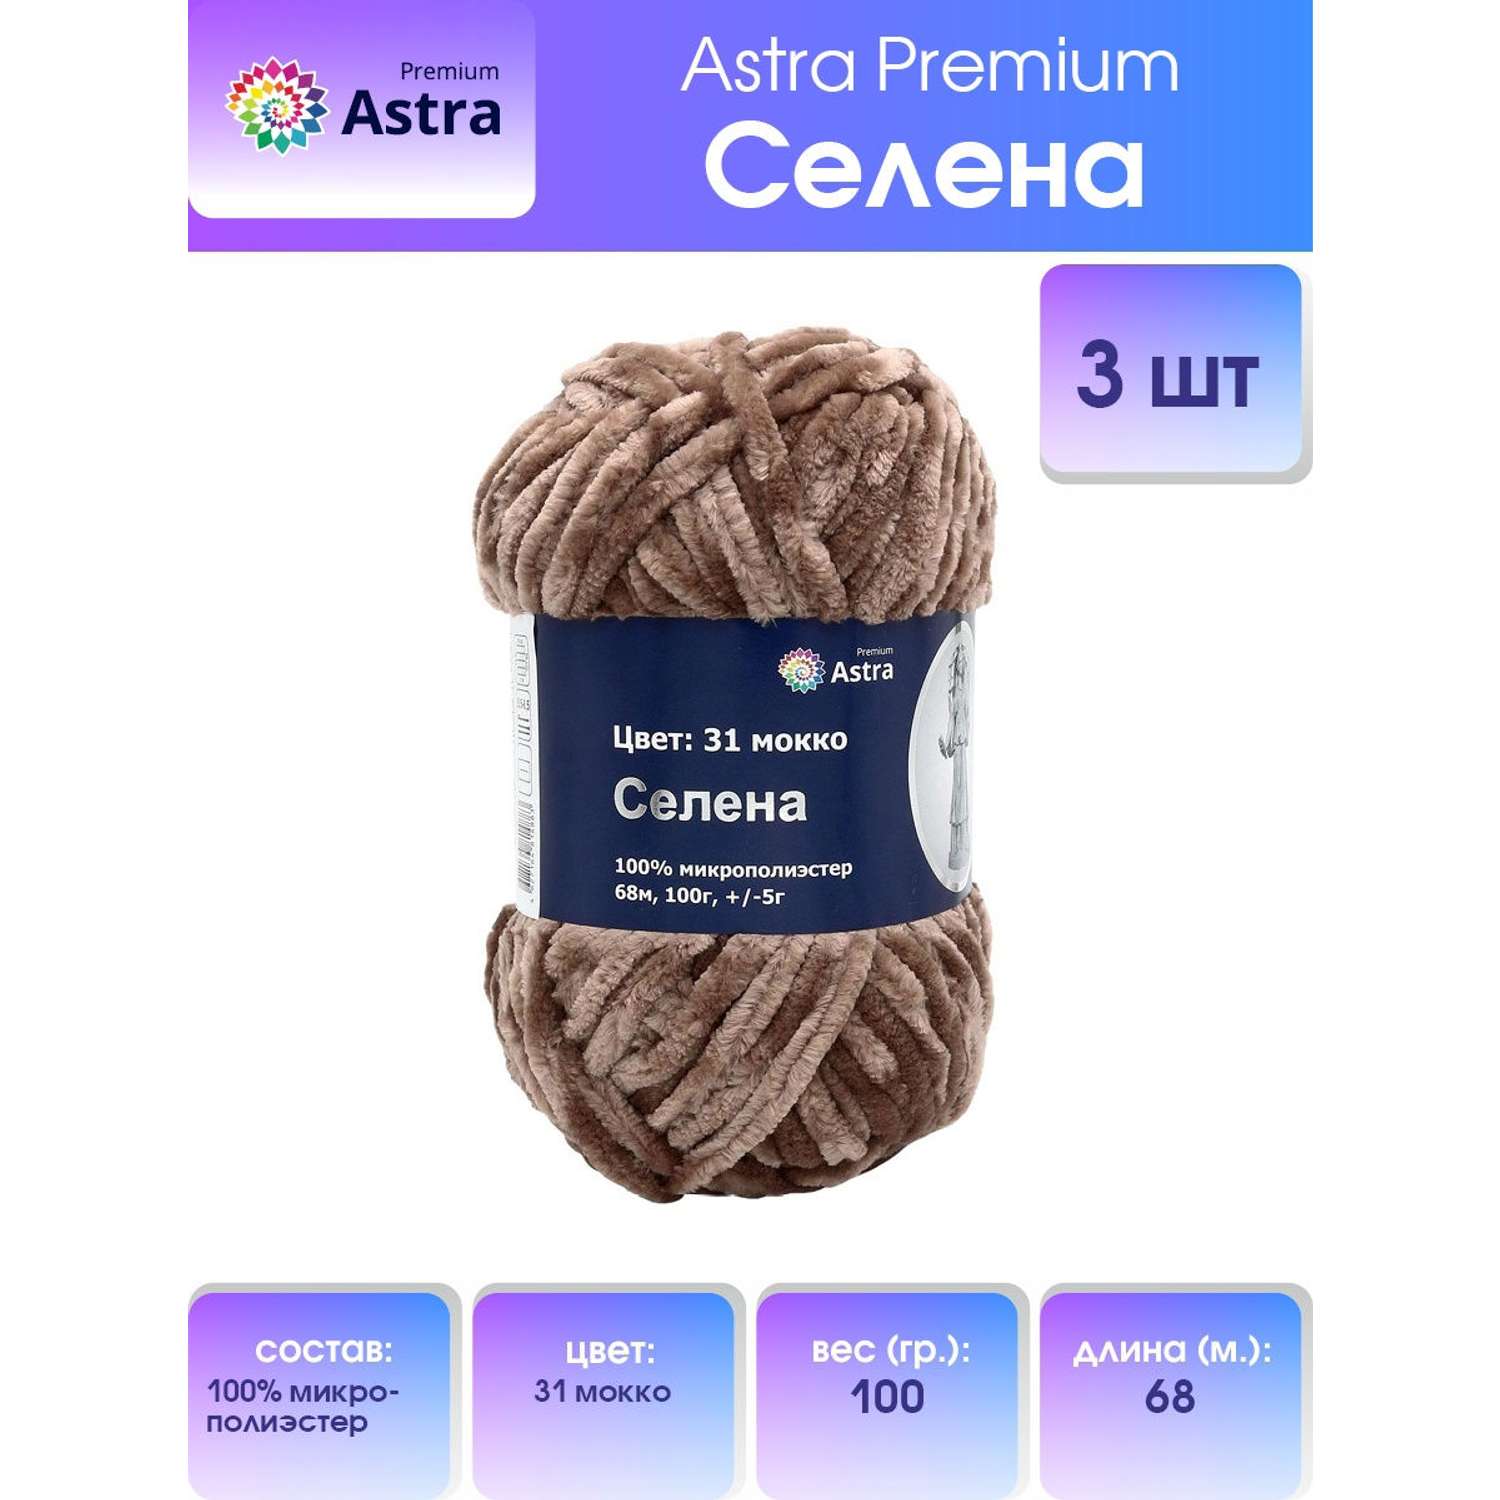 Пряжа для вязания Astra Premium селена мягкая микрополиэстер 100 гр 68 м 31 мокко 3 мотка - фото 1